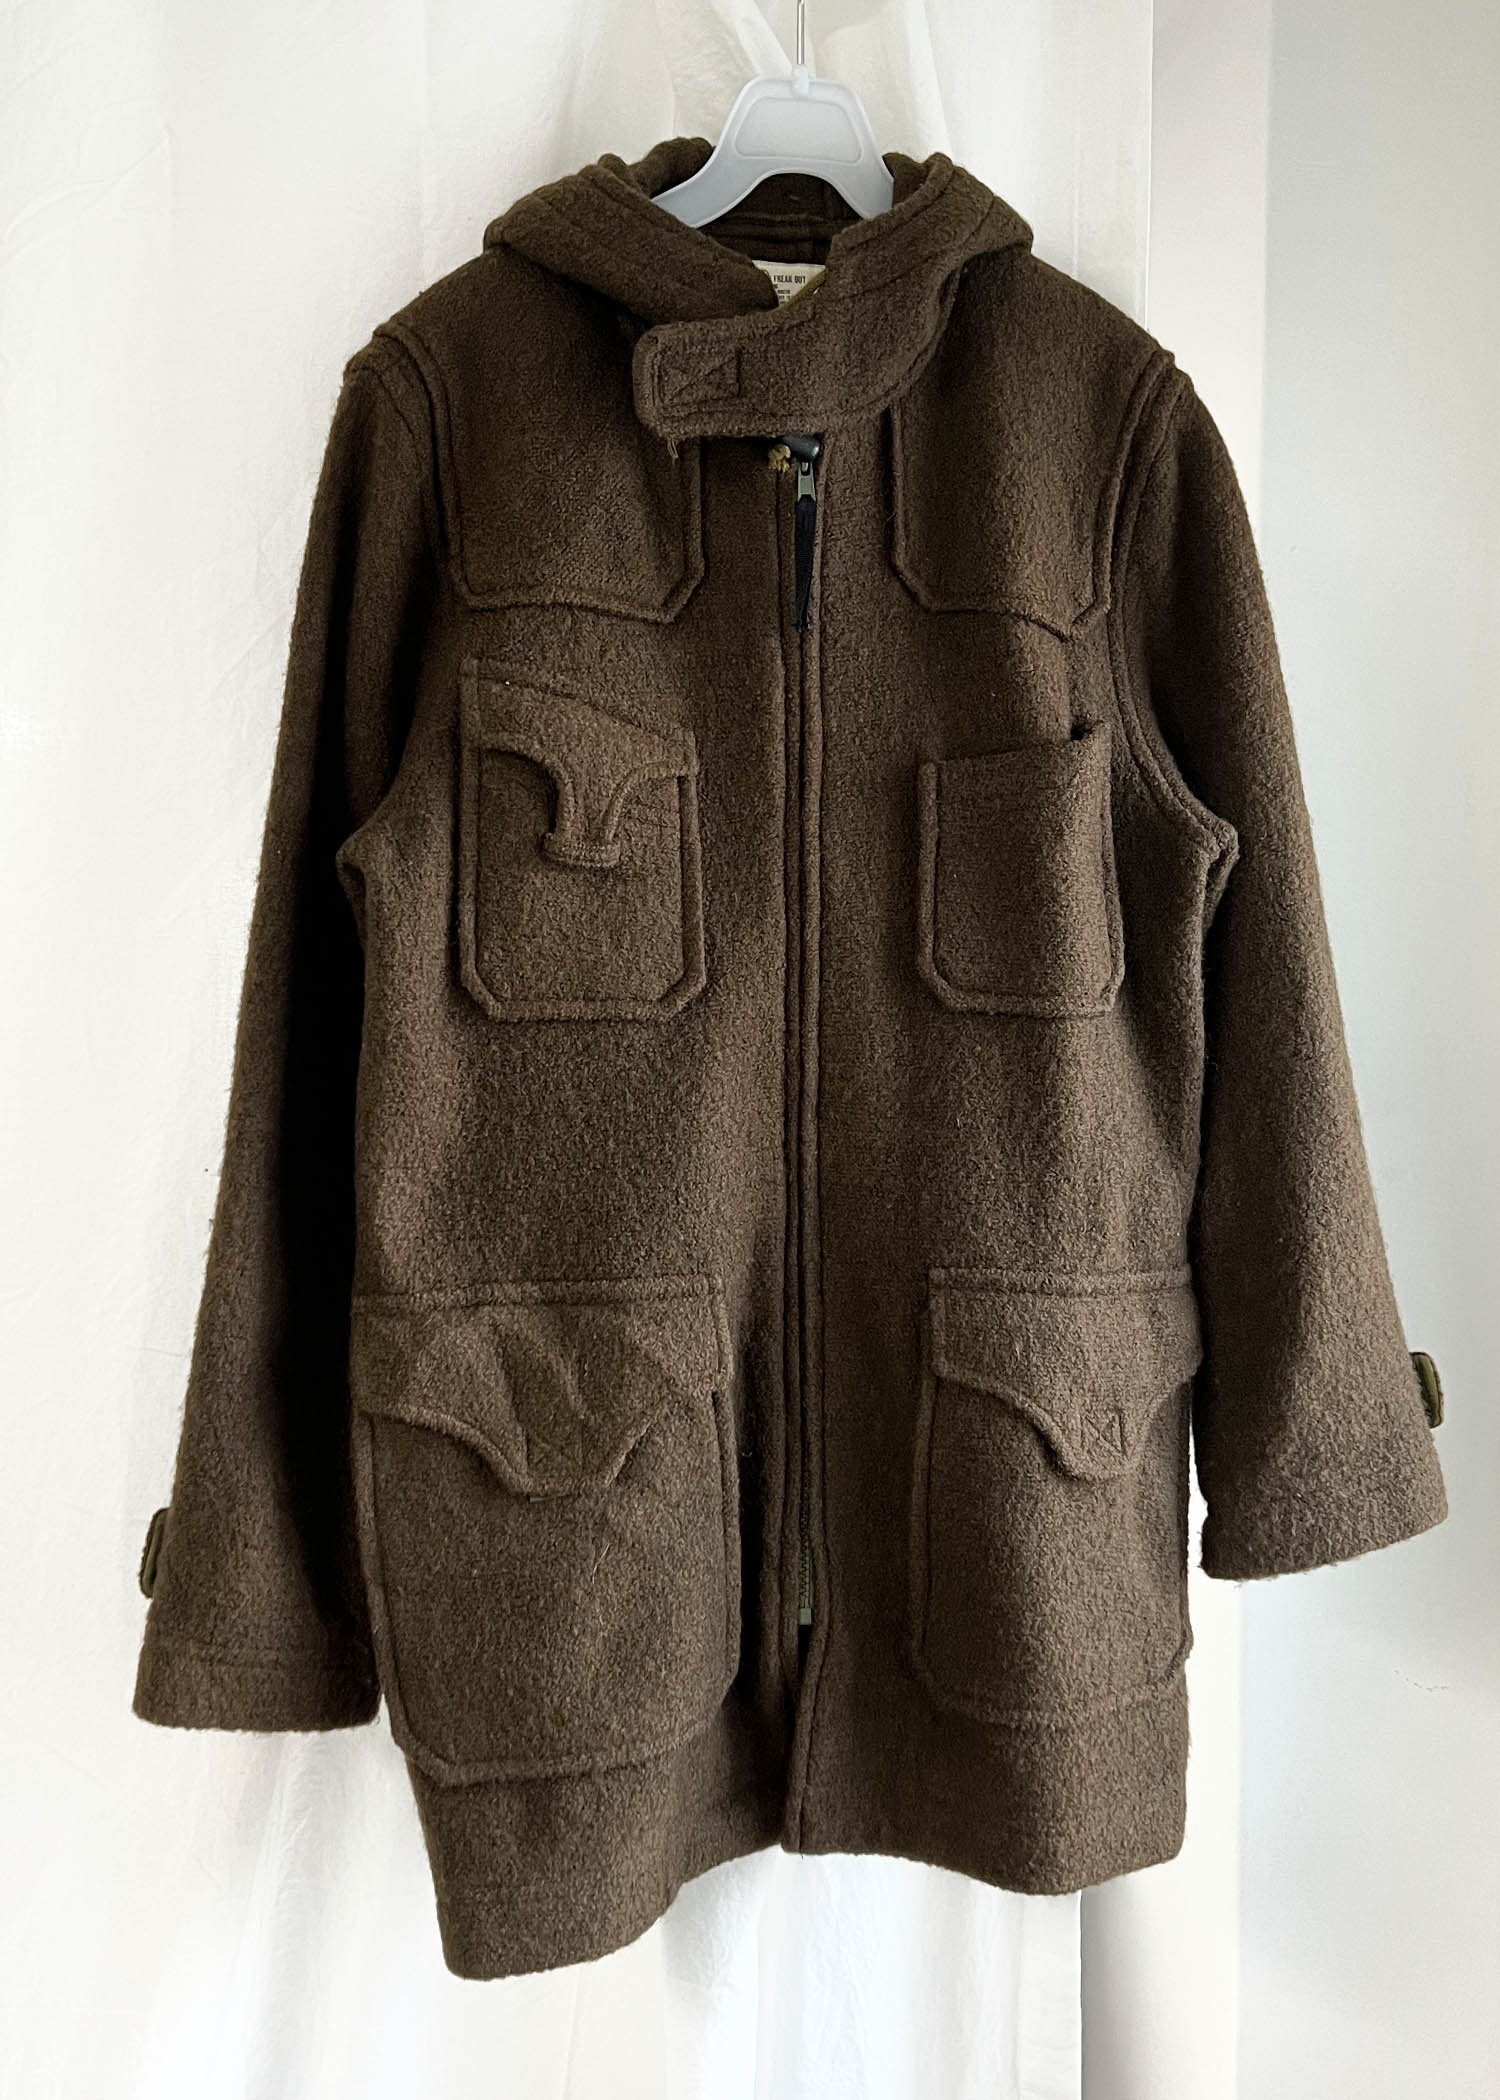 TOKYO UFO Inc. AW 1998-1999 wool jacket